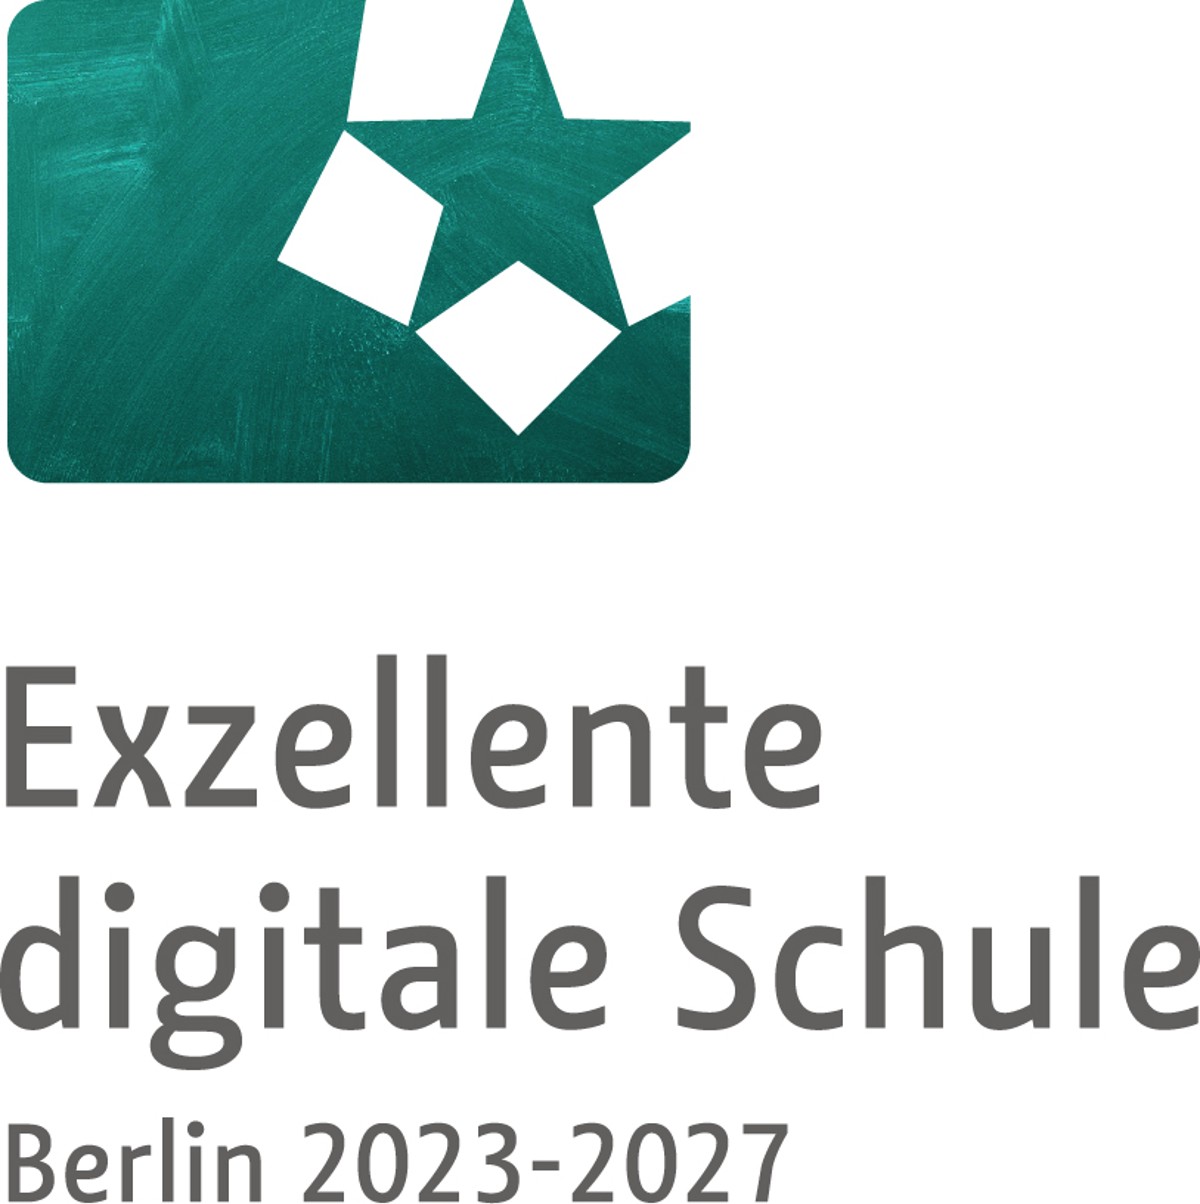 Excellent Digital School logo